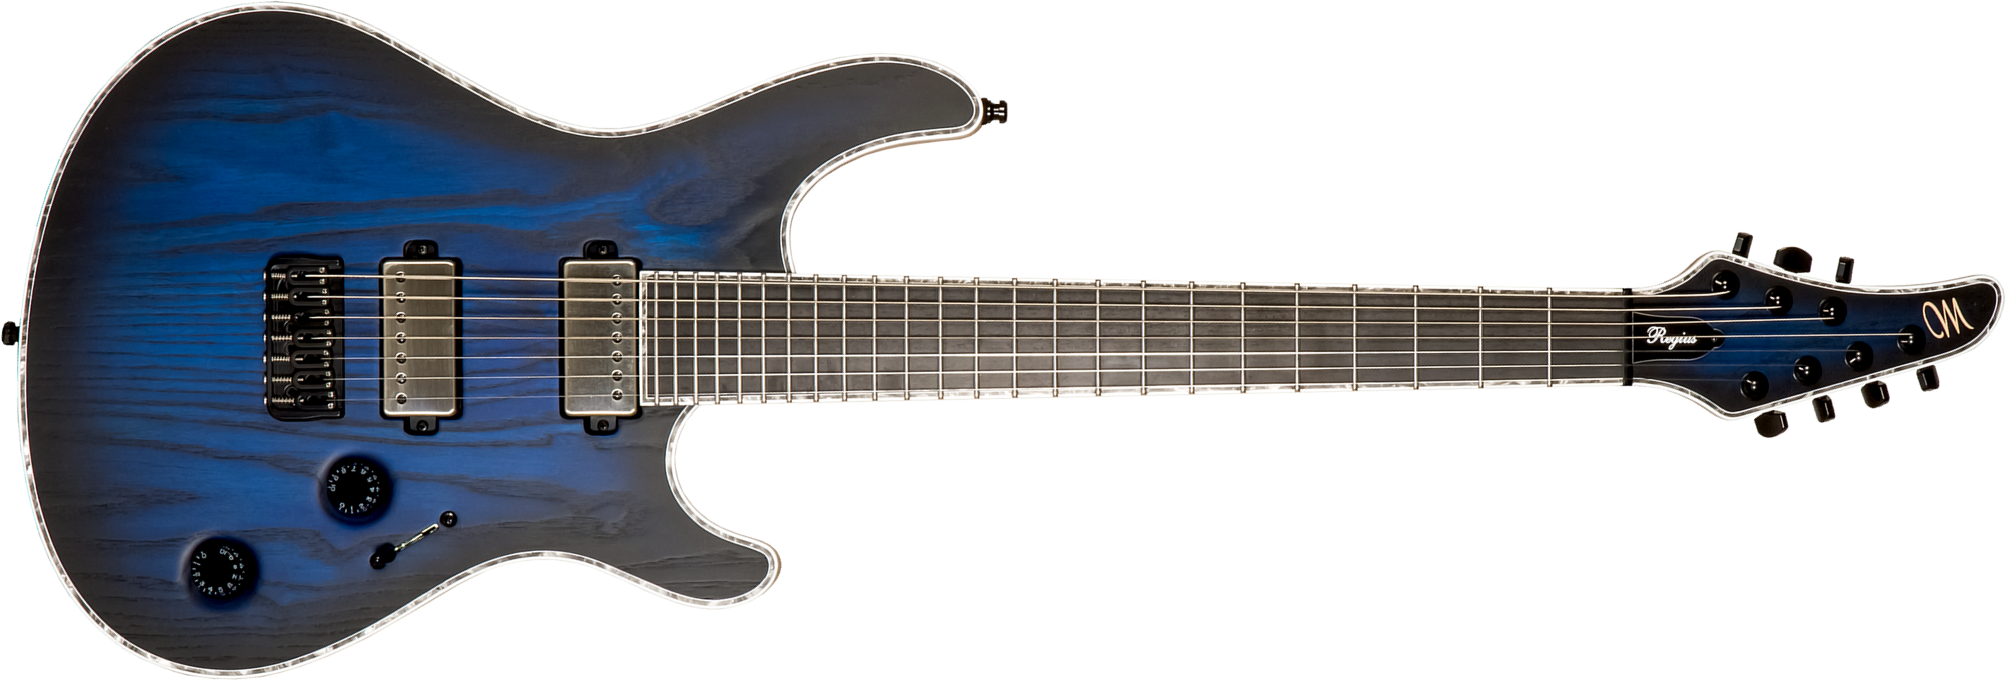 Mayones Guitars Regius Gothic Ash 7c 2h Bkp Ht Eb #rf2311786 - Trans Dirty Blue Burst / Natural Matt - 7 string electric guitar - Main picture